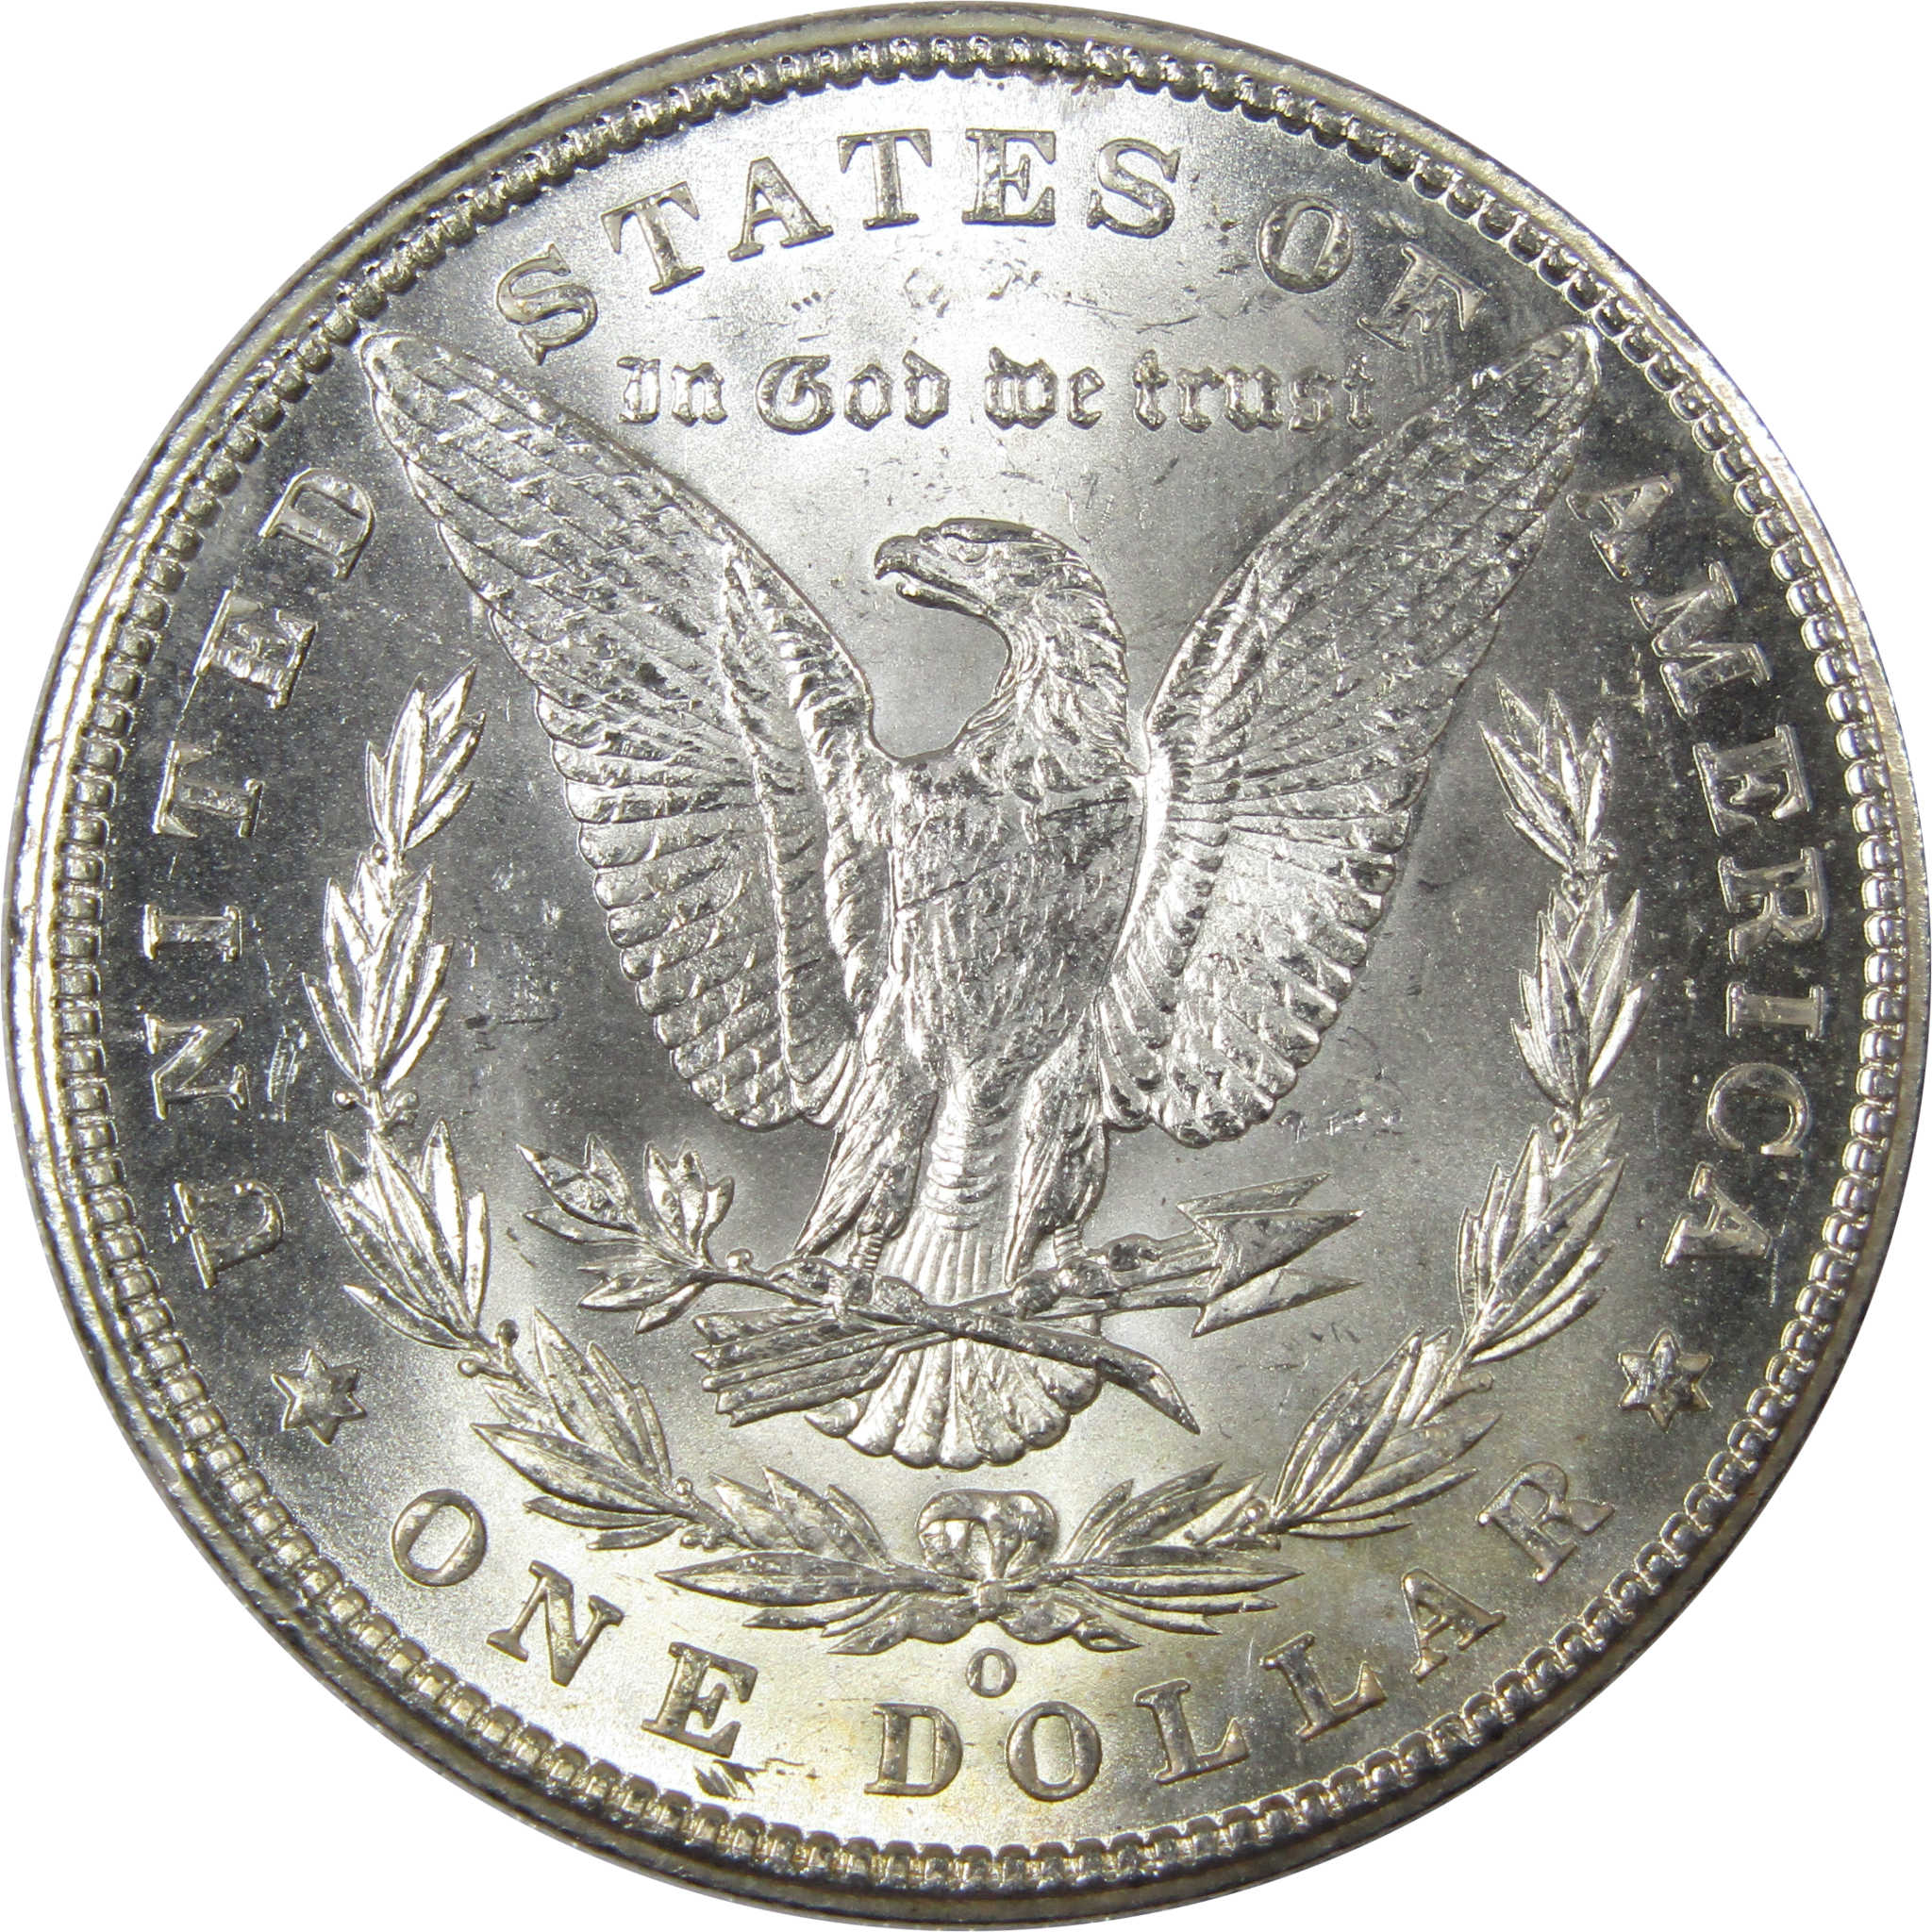 1900 O Morgan Dollar BU Uncirculated Mint State 90% Silver SKU:IPC9745 - Morgan coin - Morgan silver dollar - Morgan silver dollar for sale - Profile Coins &amp; Collectibles